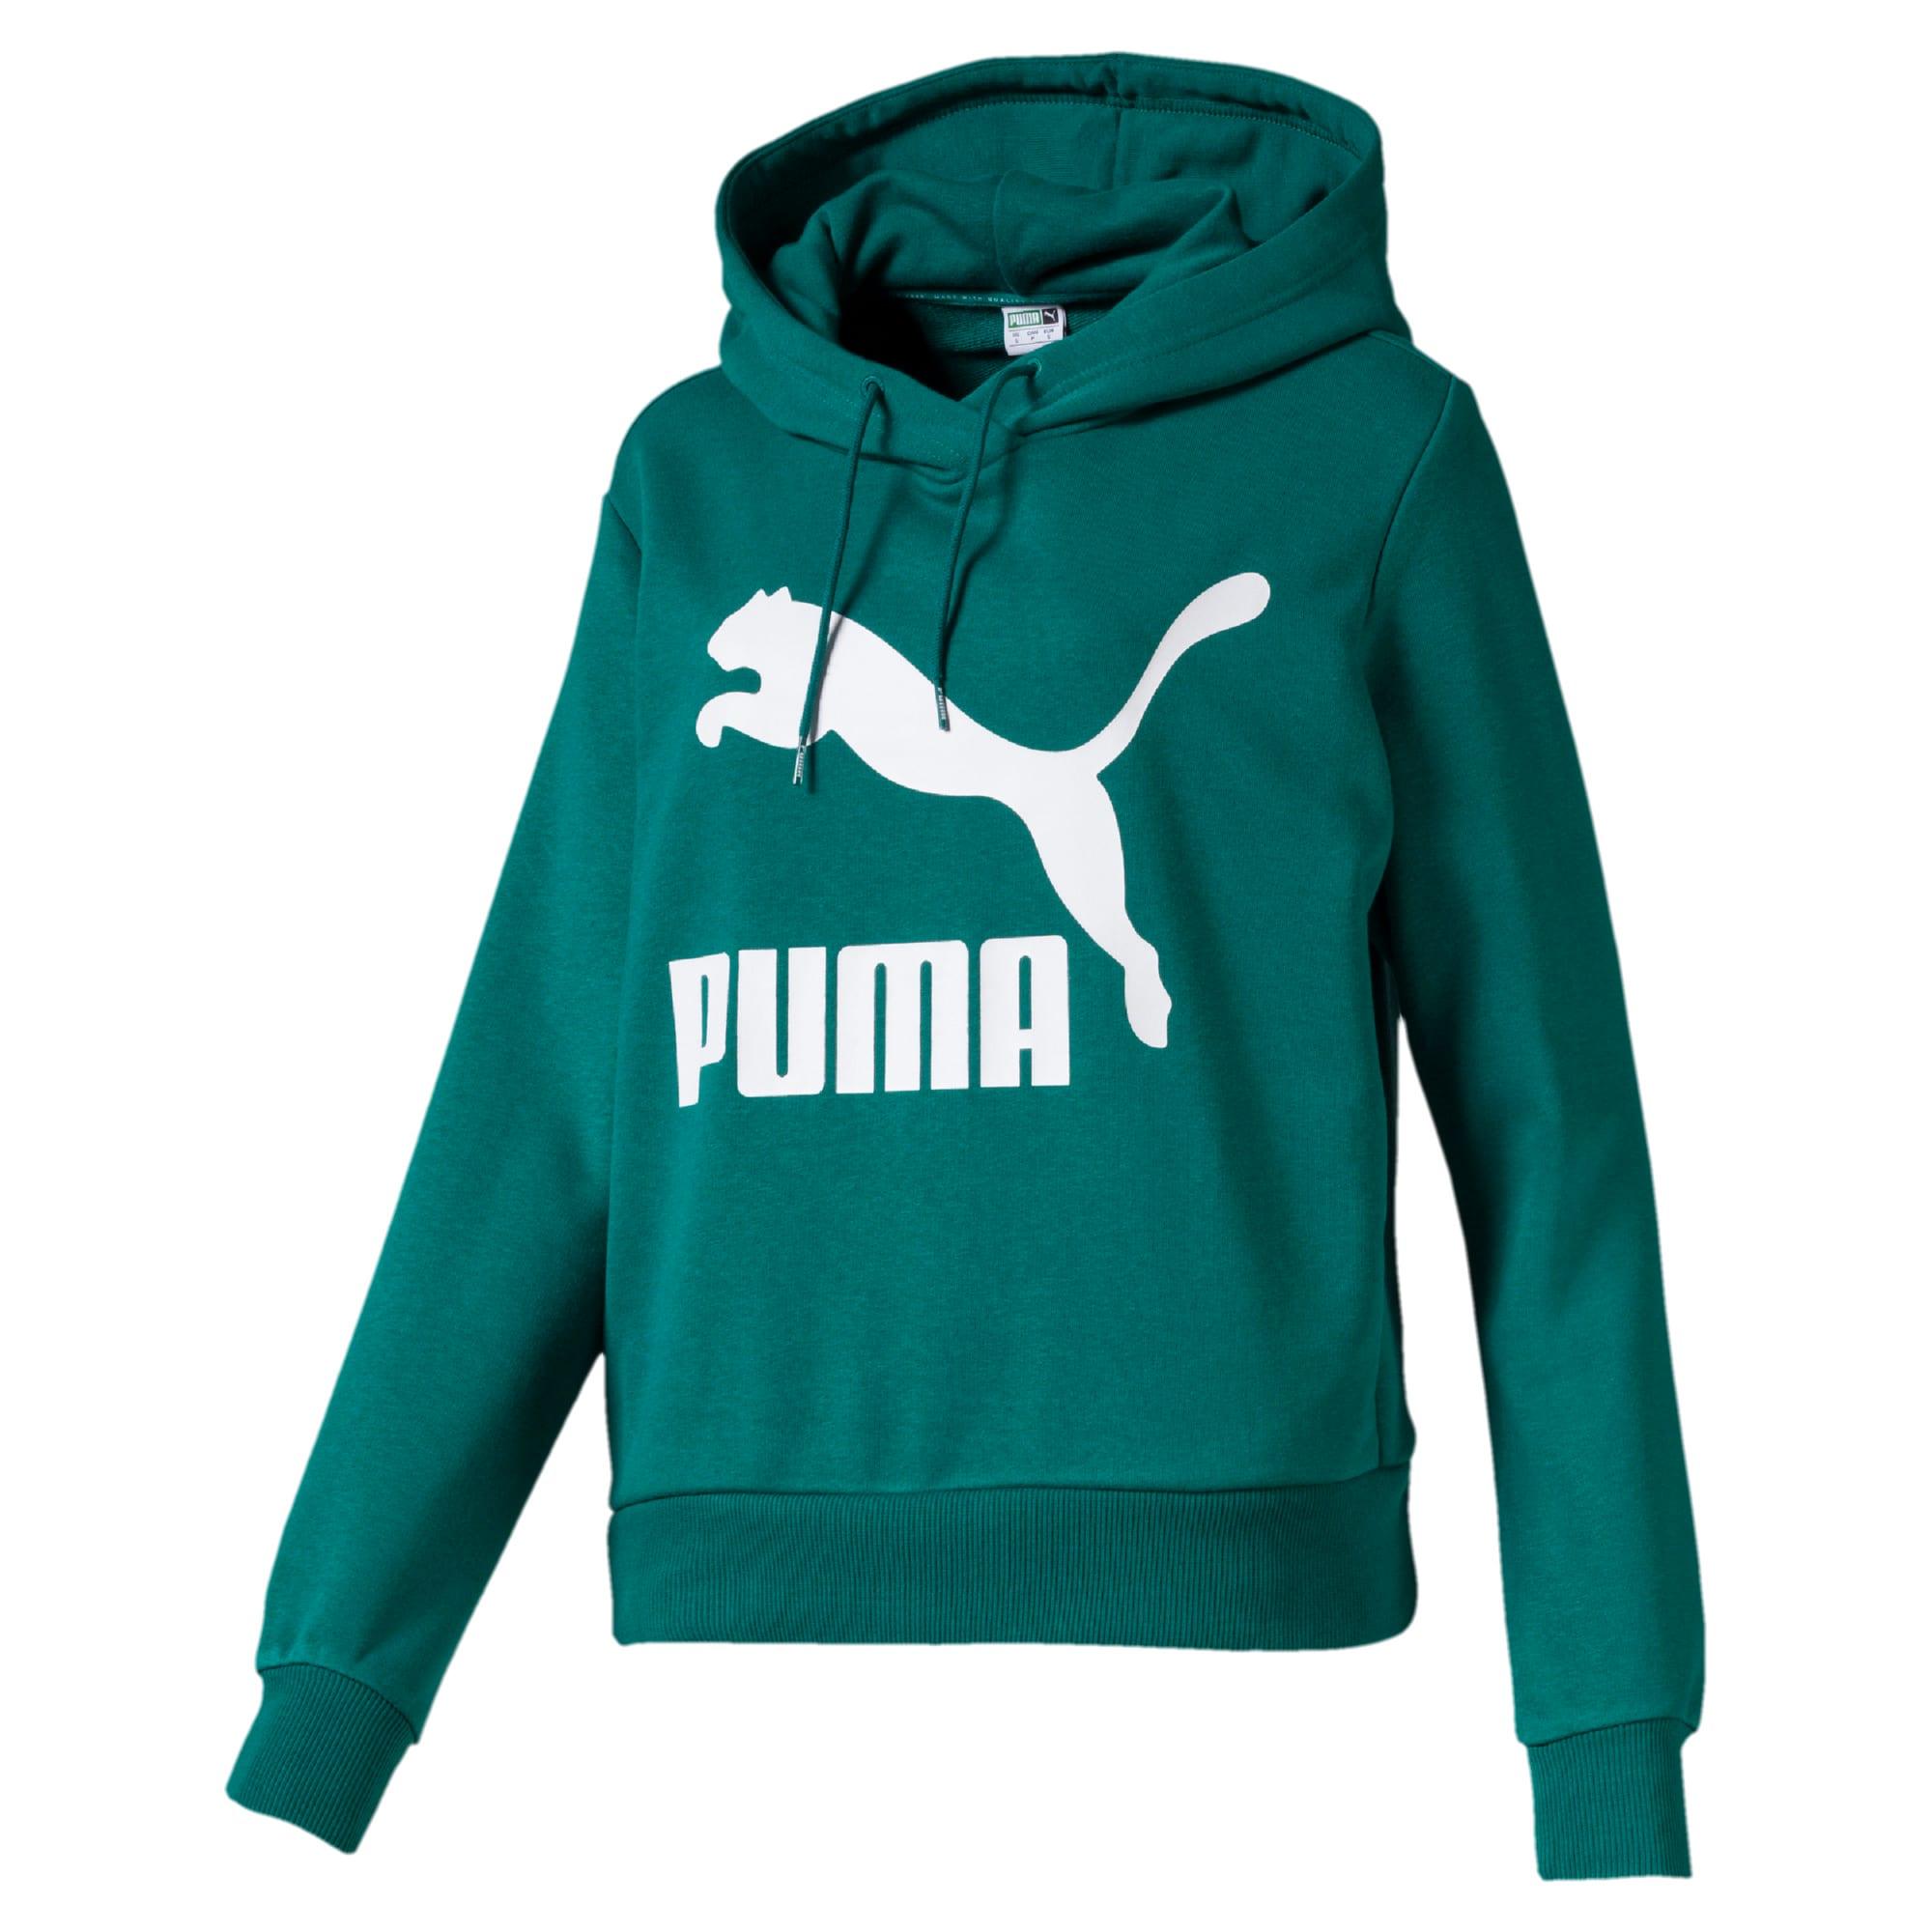 PUMA Cotton Classics Women's Logo Hoodie in Teal Green (Green) - Lyst